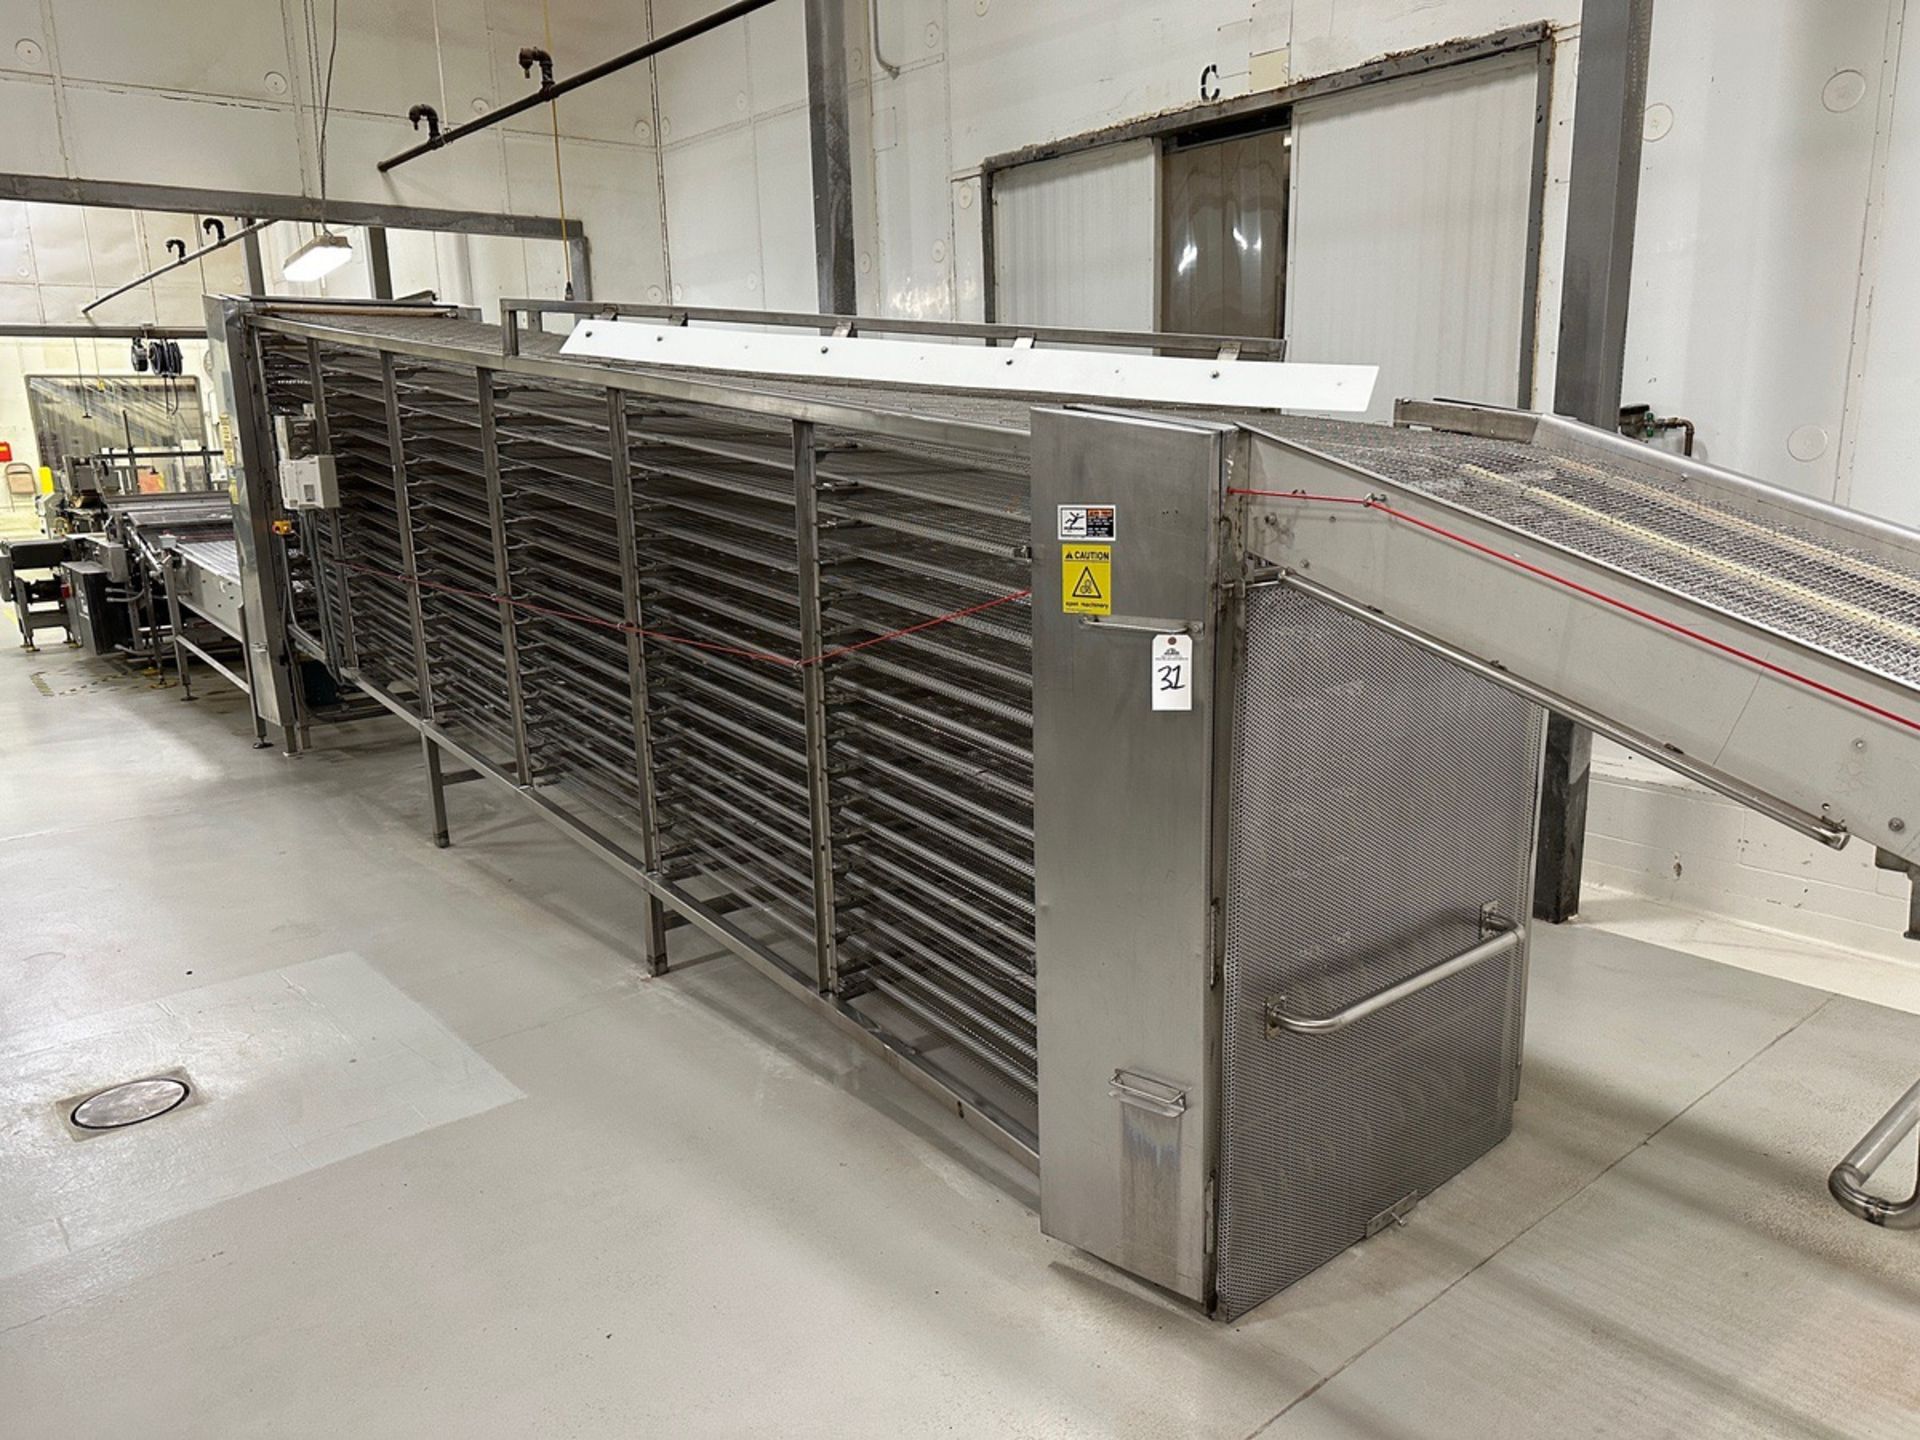 Stainless Steel Cooling Conveyor with 3' Belt Width and Allen-Bradley PowerFlex 70 | Rig Fee $1800